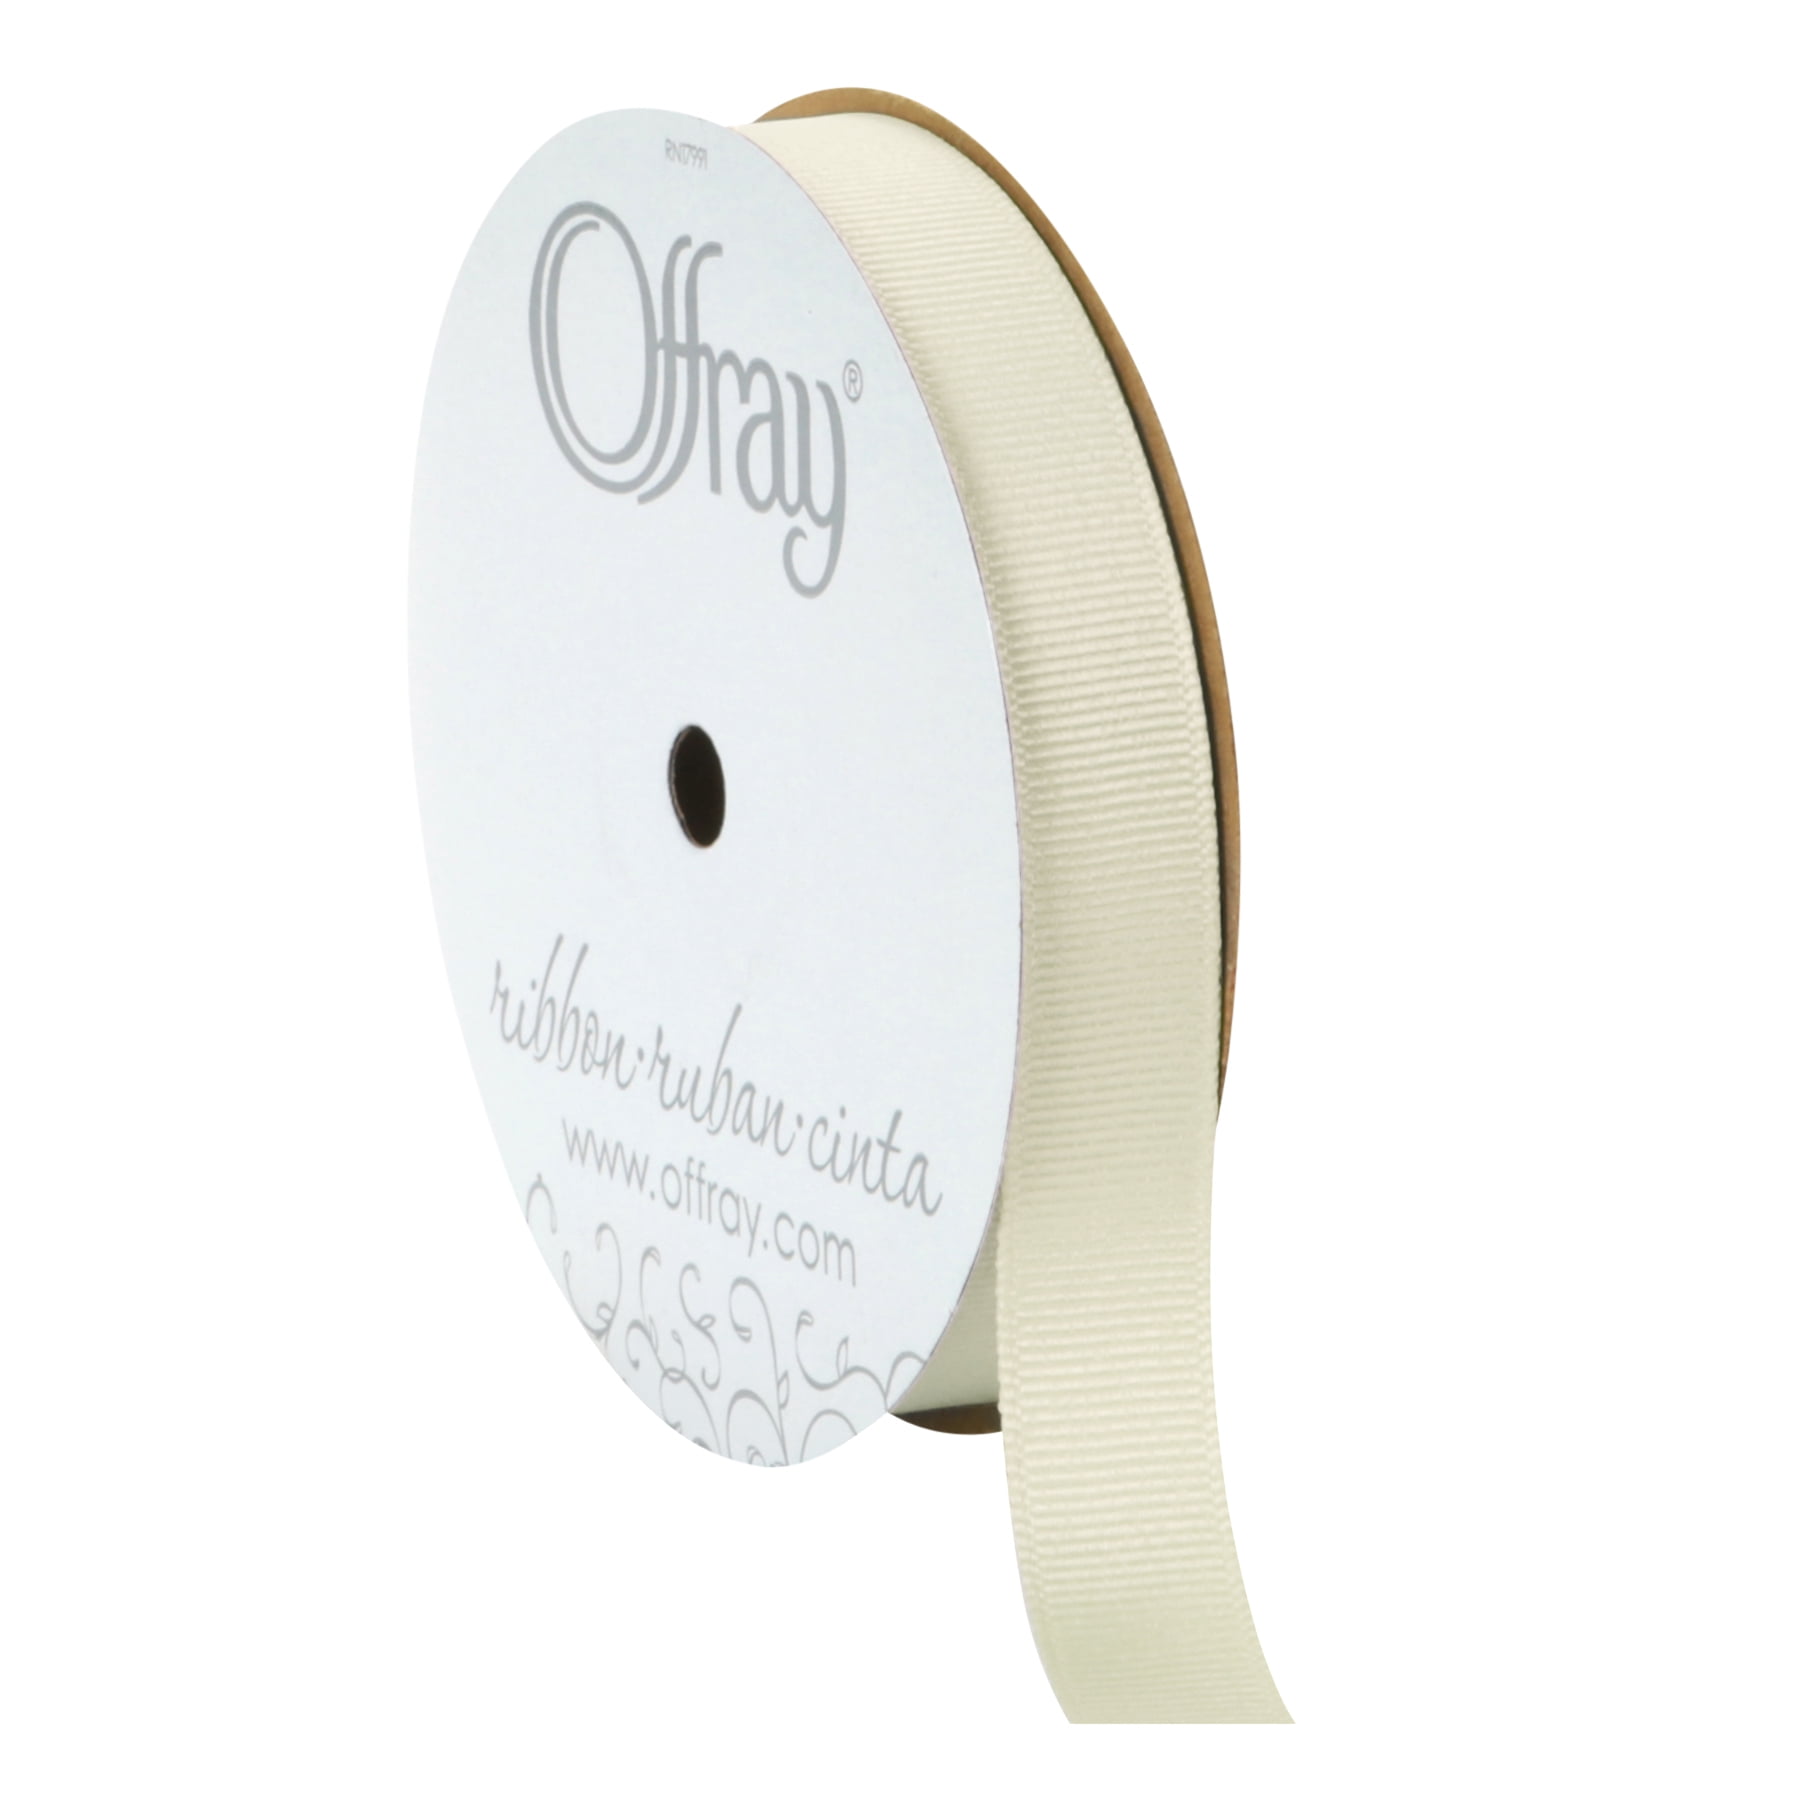 Offray Ribbon, Antique White 5/8 inch Grosgrain Polyester Ribbon, 18 feet